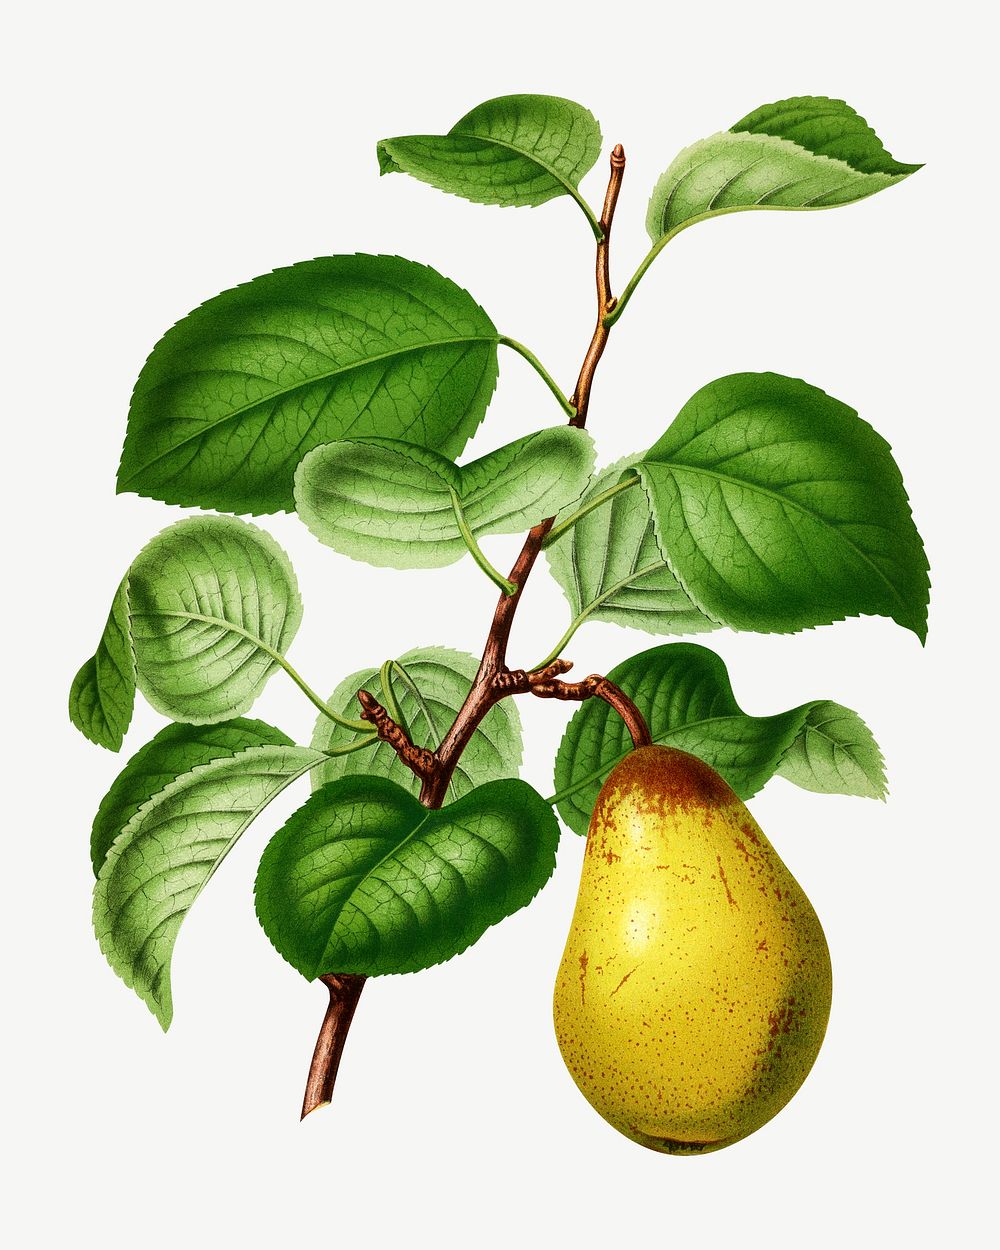 Vintage pear illustration, collage element psd. Remixed from our own original 1879 edition of Nederlandsche Flora en Pomona. 